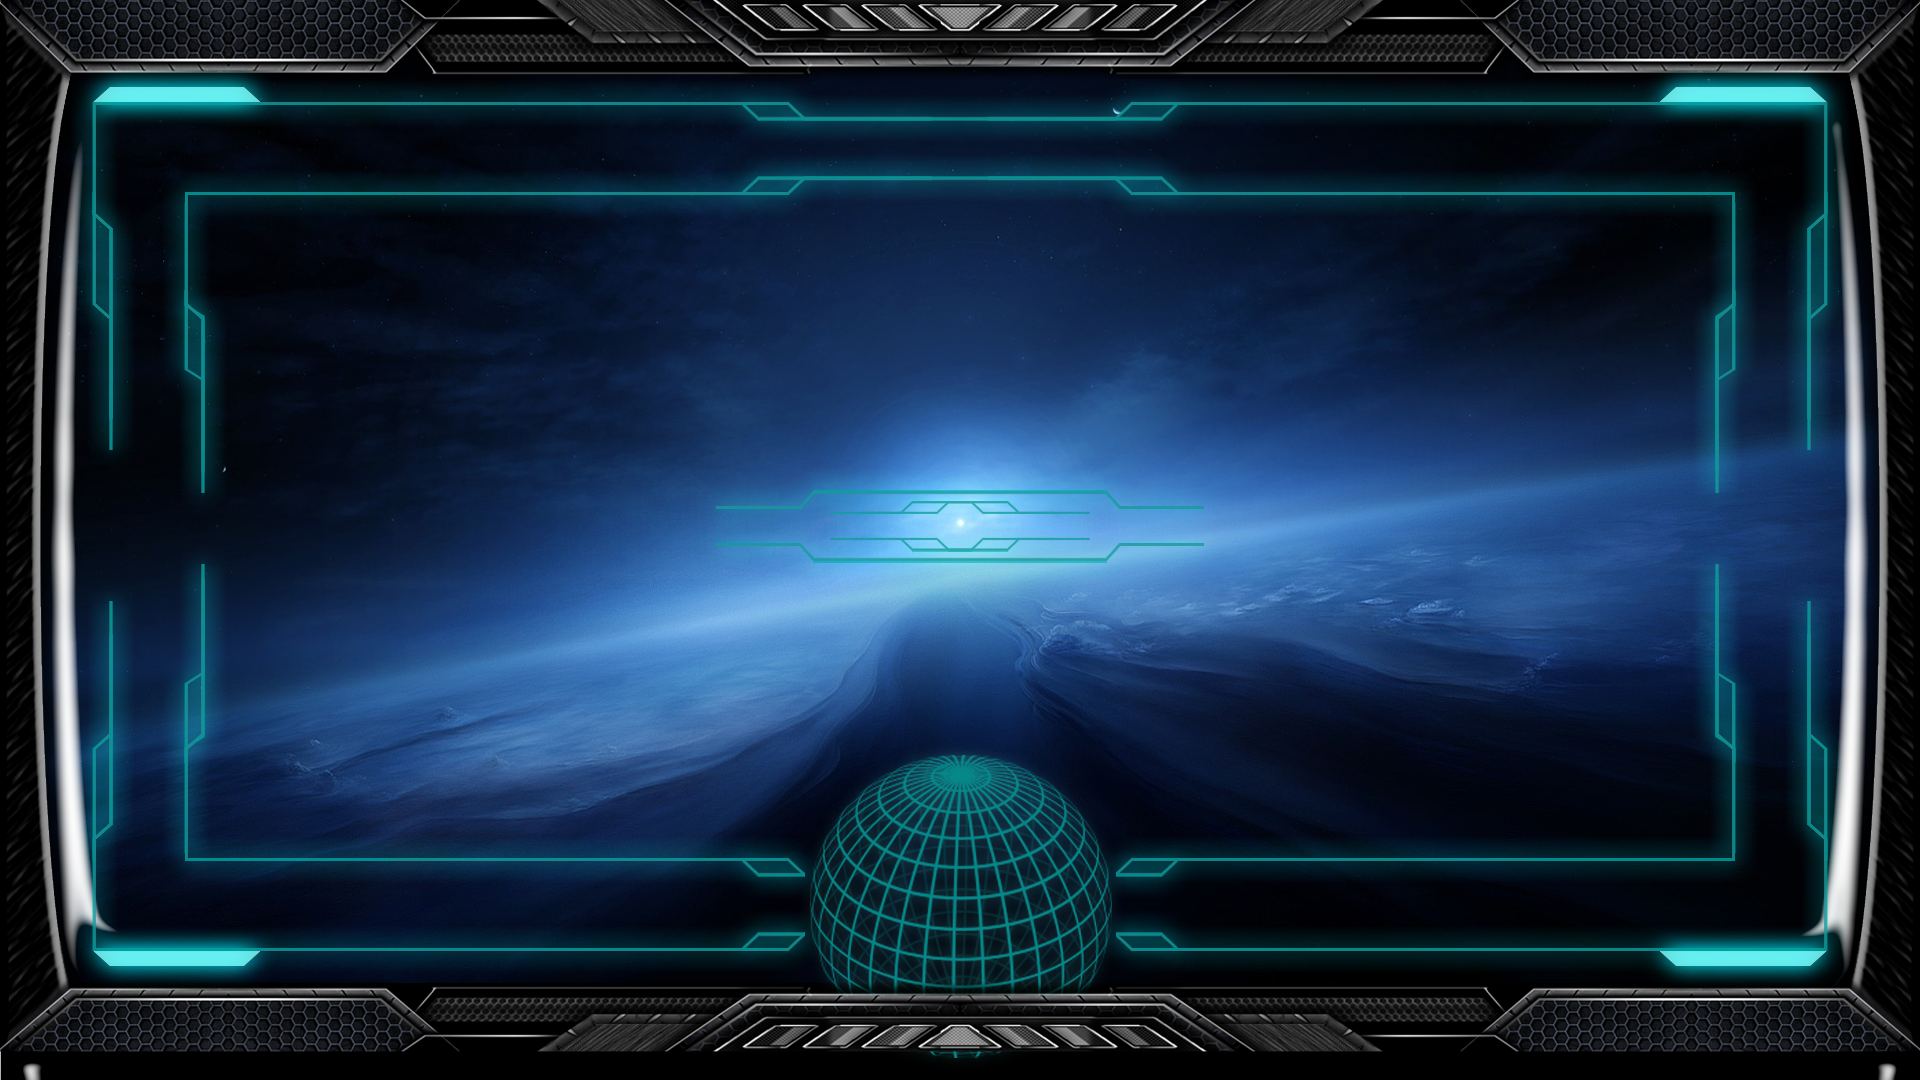 Interface Space Ship Wallpaper By Exostyx Customization